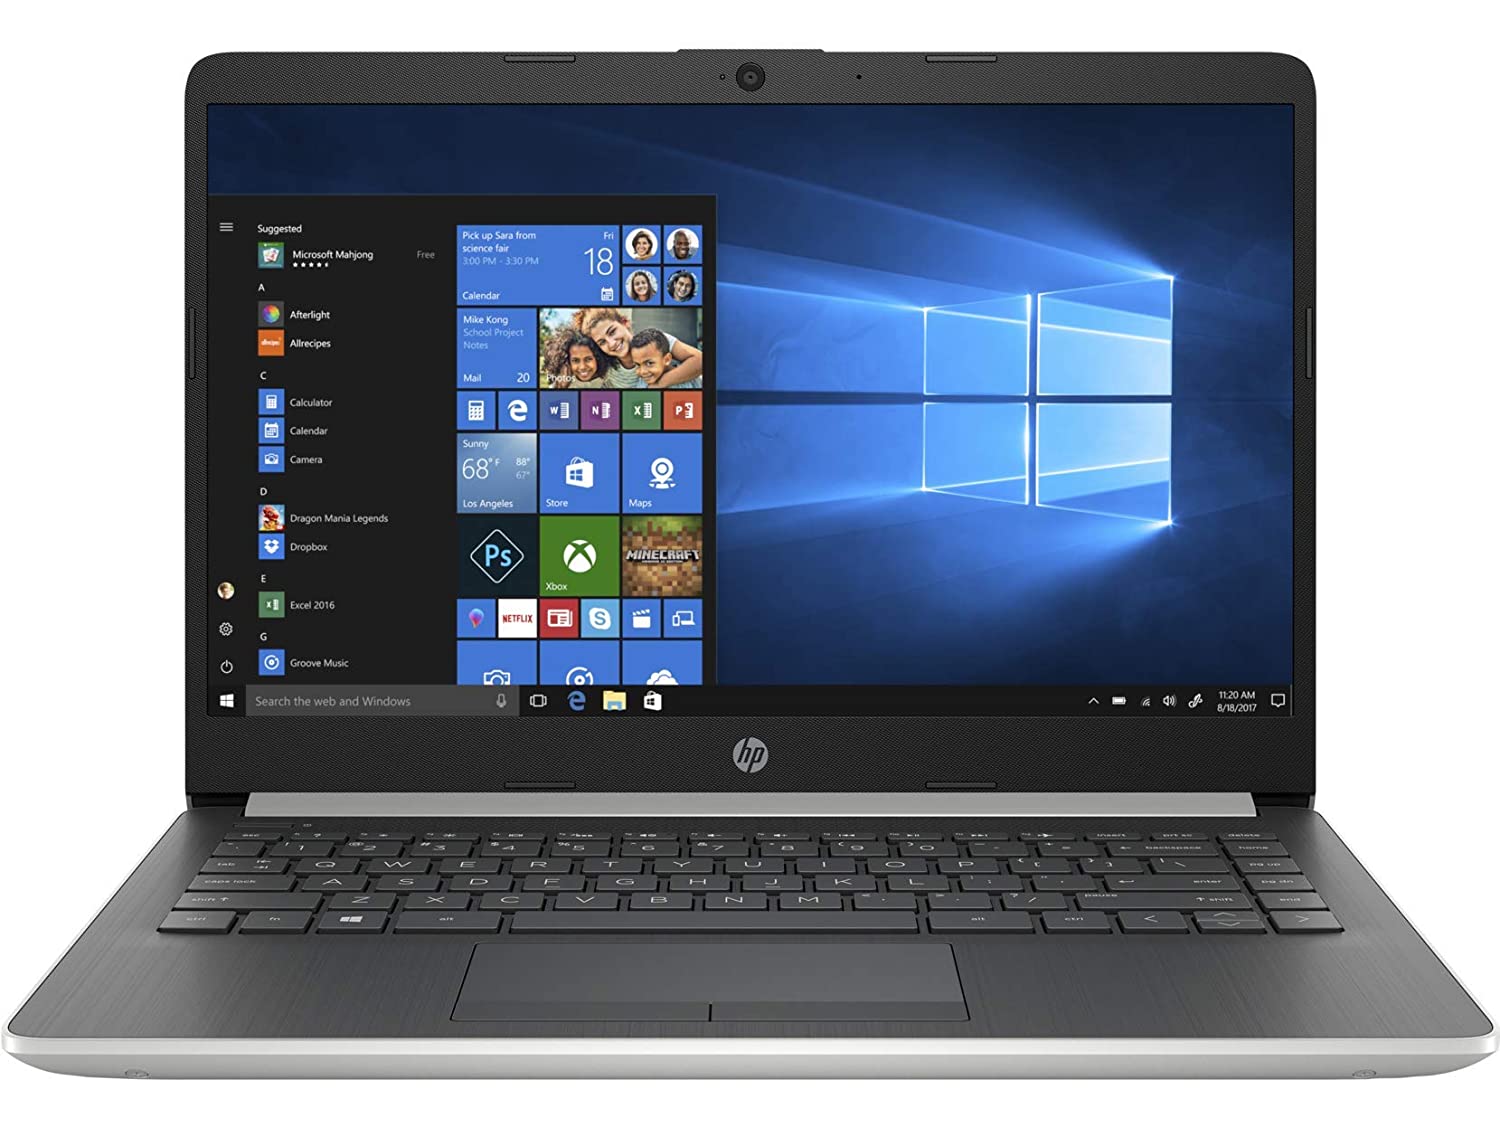 HP 14 - DK0093AU Laptop Ryzen 5 3500U/8GB/1TB HDD + 256GB SSD/Win 10/Microsoft Office 2019/Radeon Vega 8 Graphics) 1 year warranty with bag